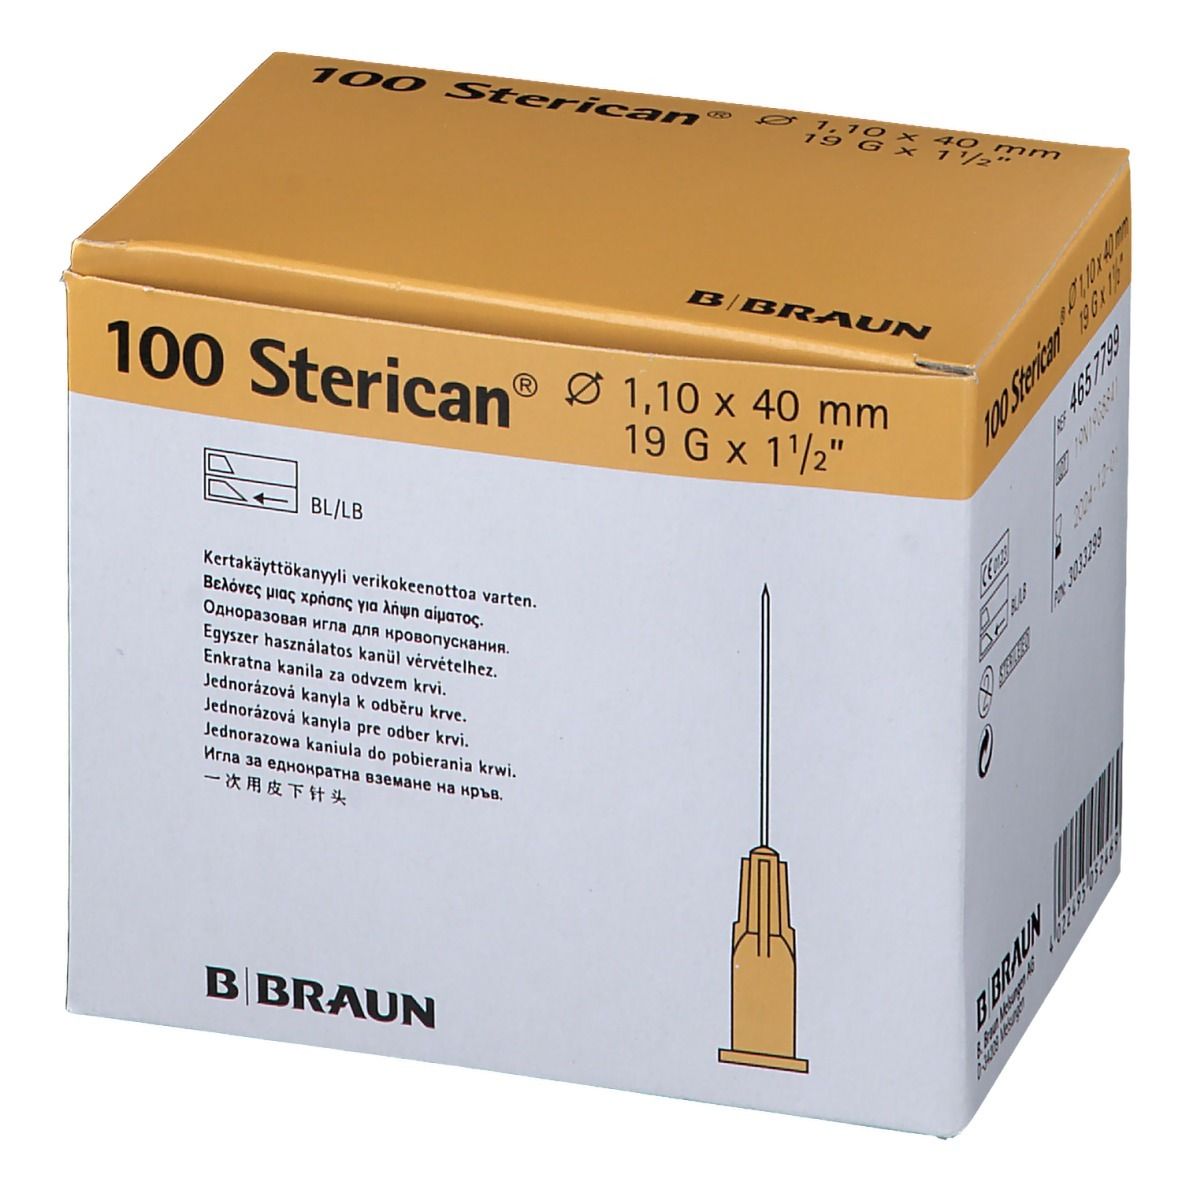 Sterican® zur Blutentnahme G 19 x 1 1/2 1,10 x 40 mm